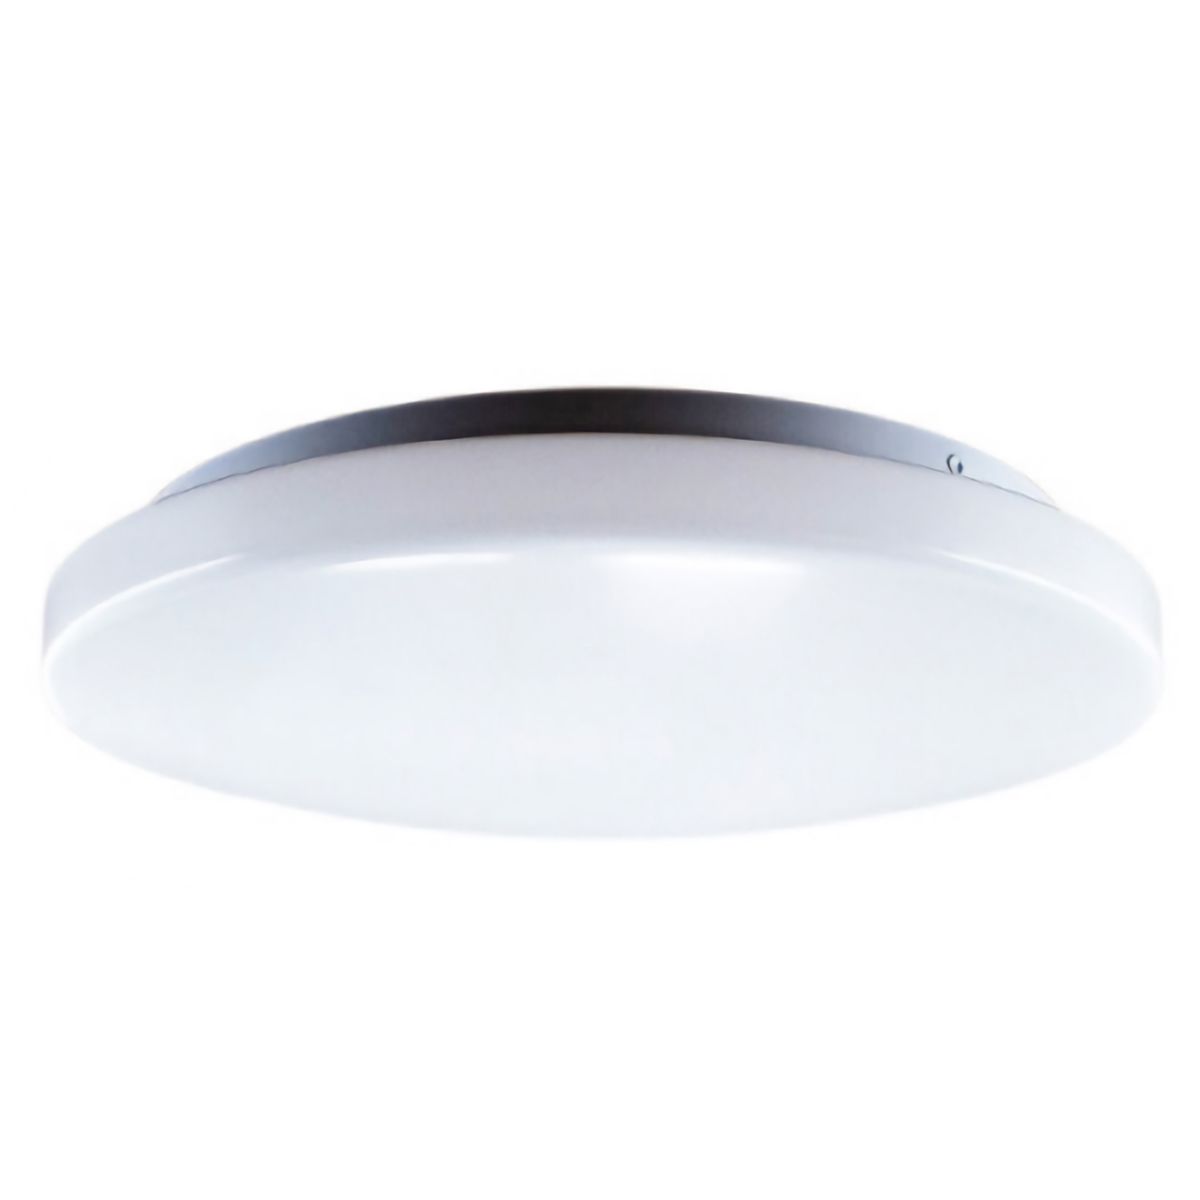 RemPhos Base Drum utility style 14 in. LED Flush Mount Light Selectable CCT White finish